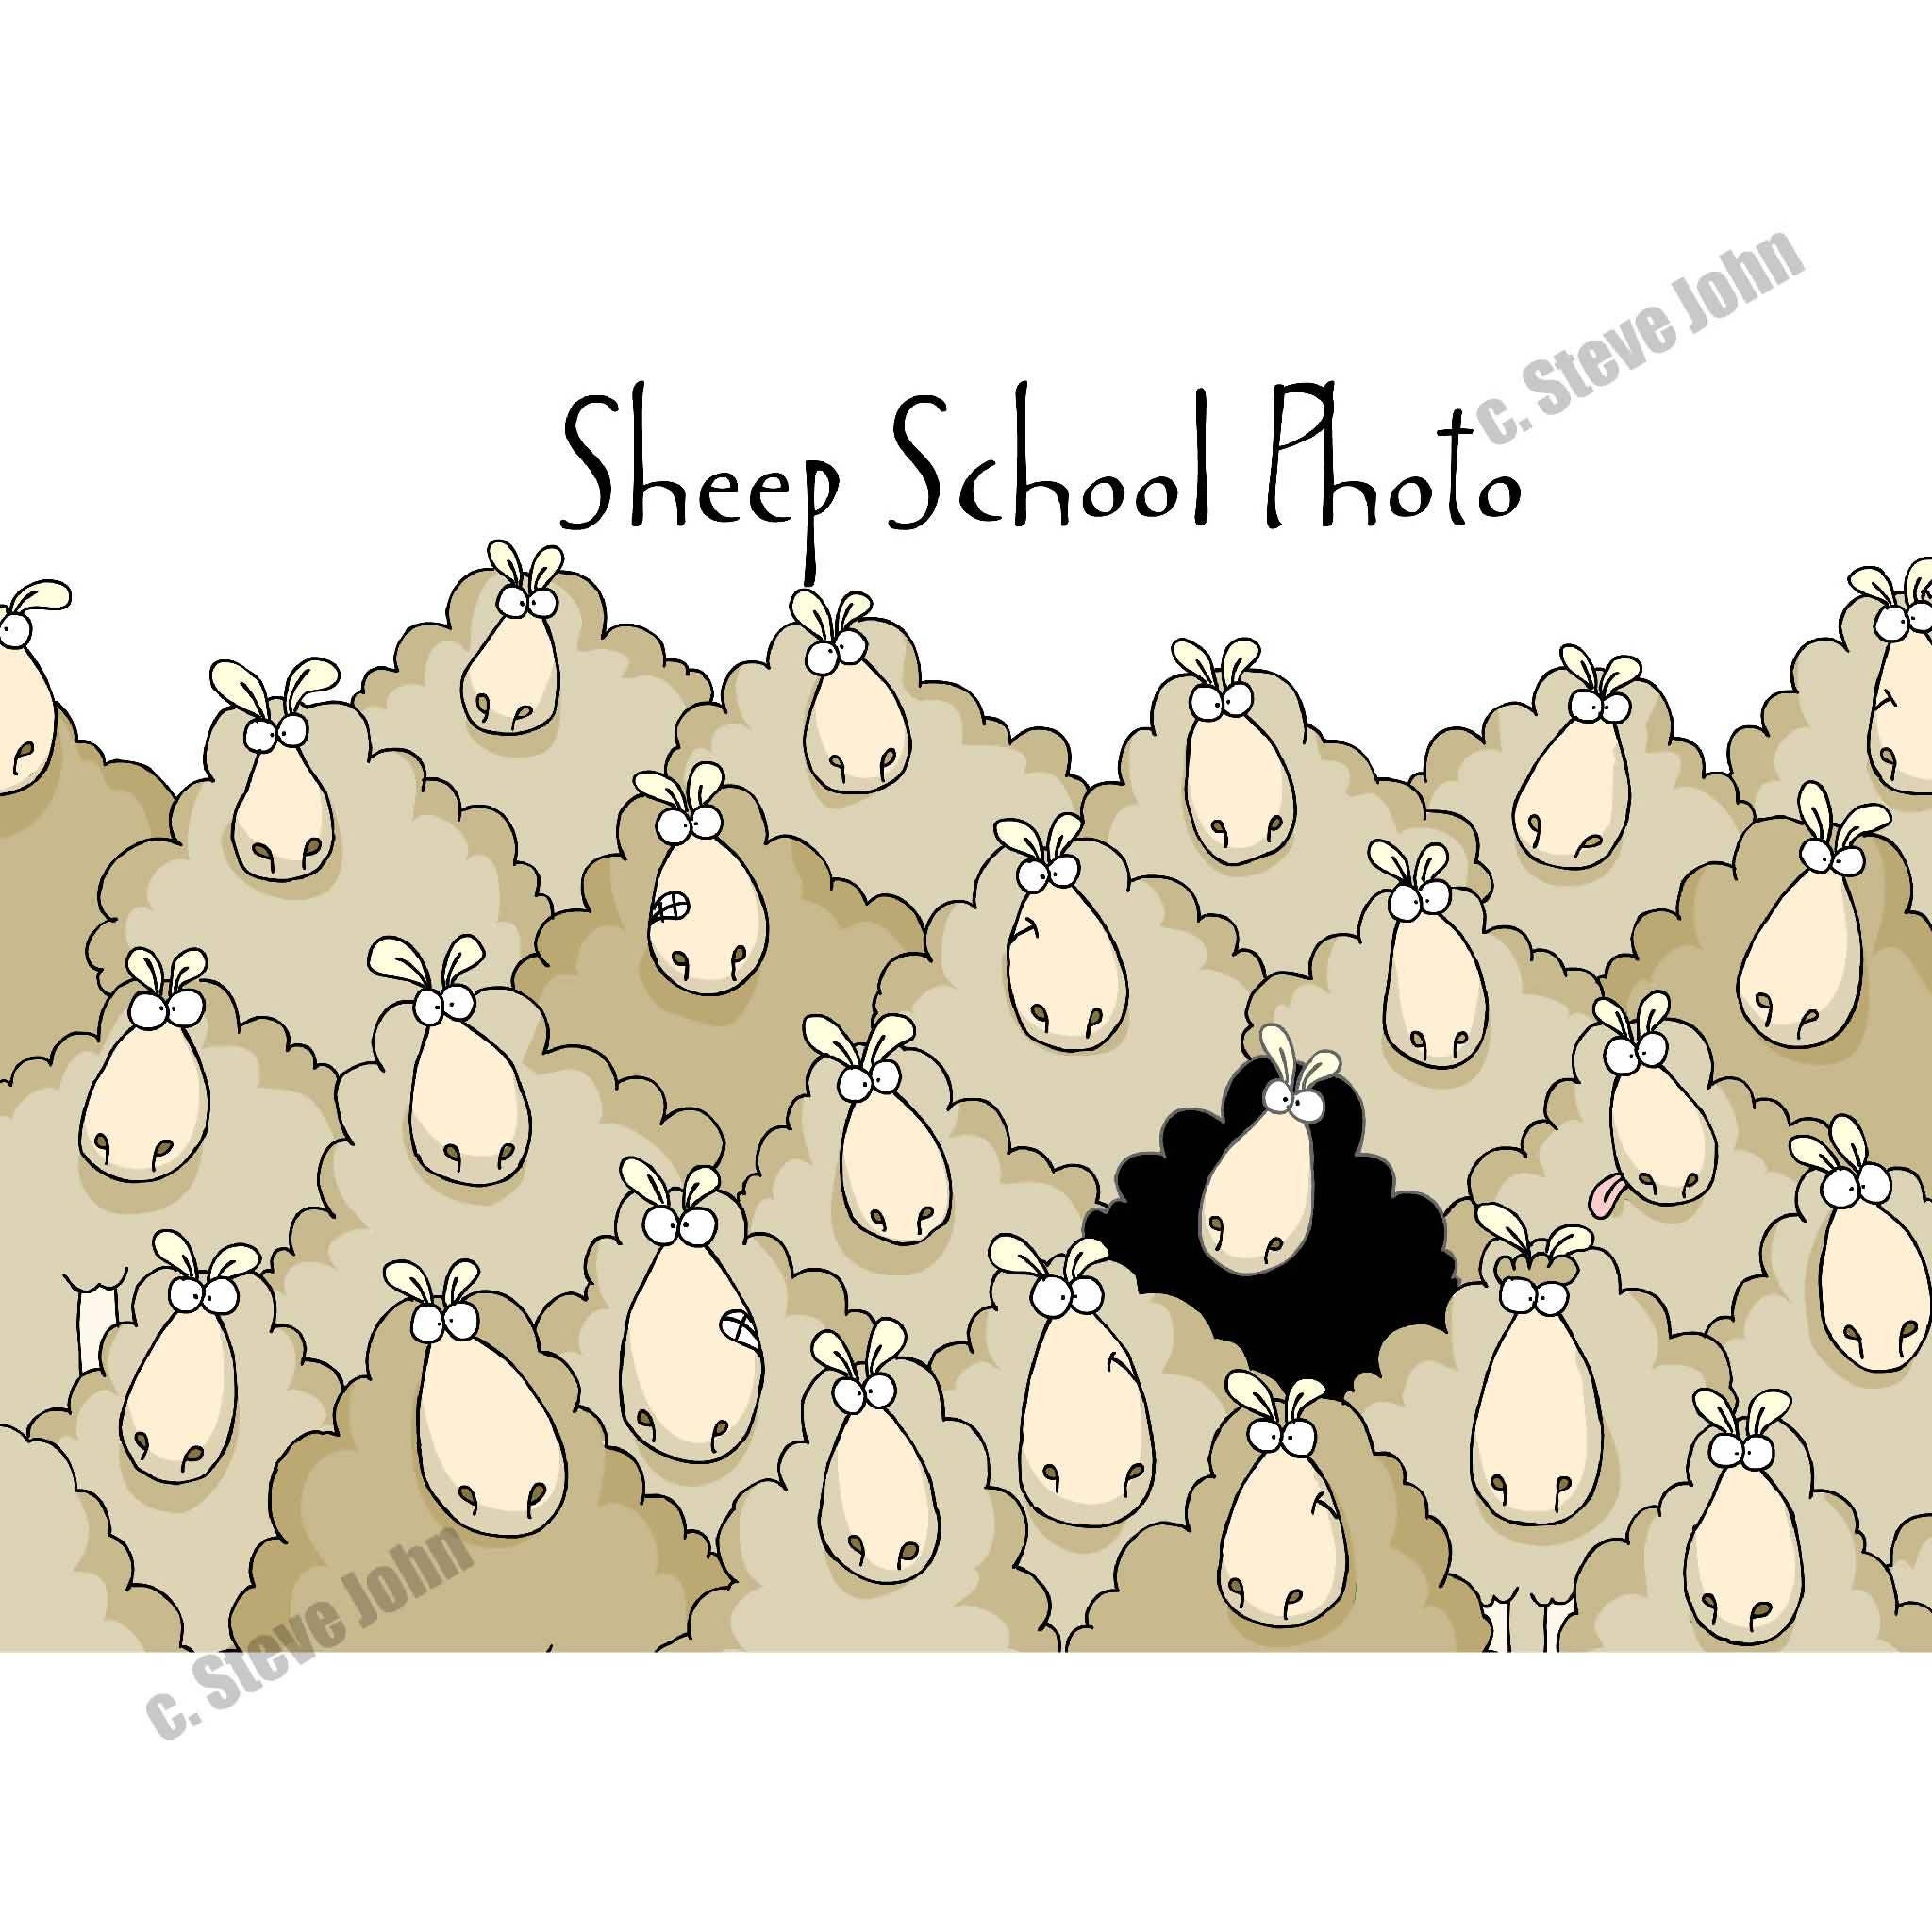 SHEEP SCHOOL PHOTO card